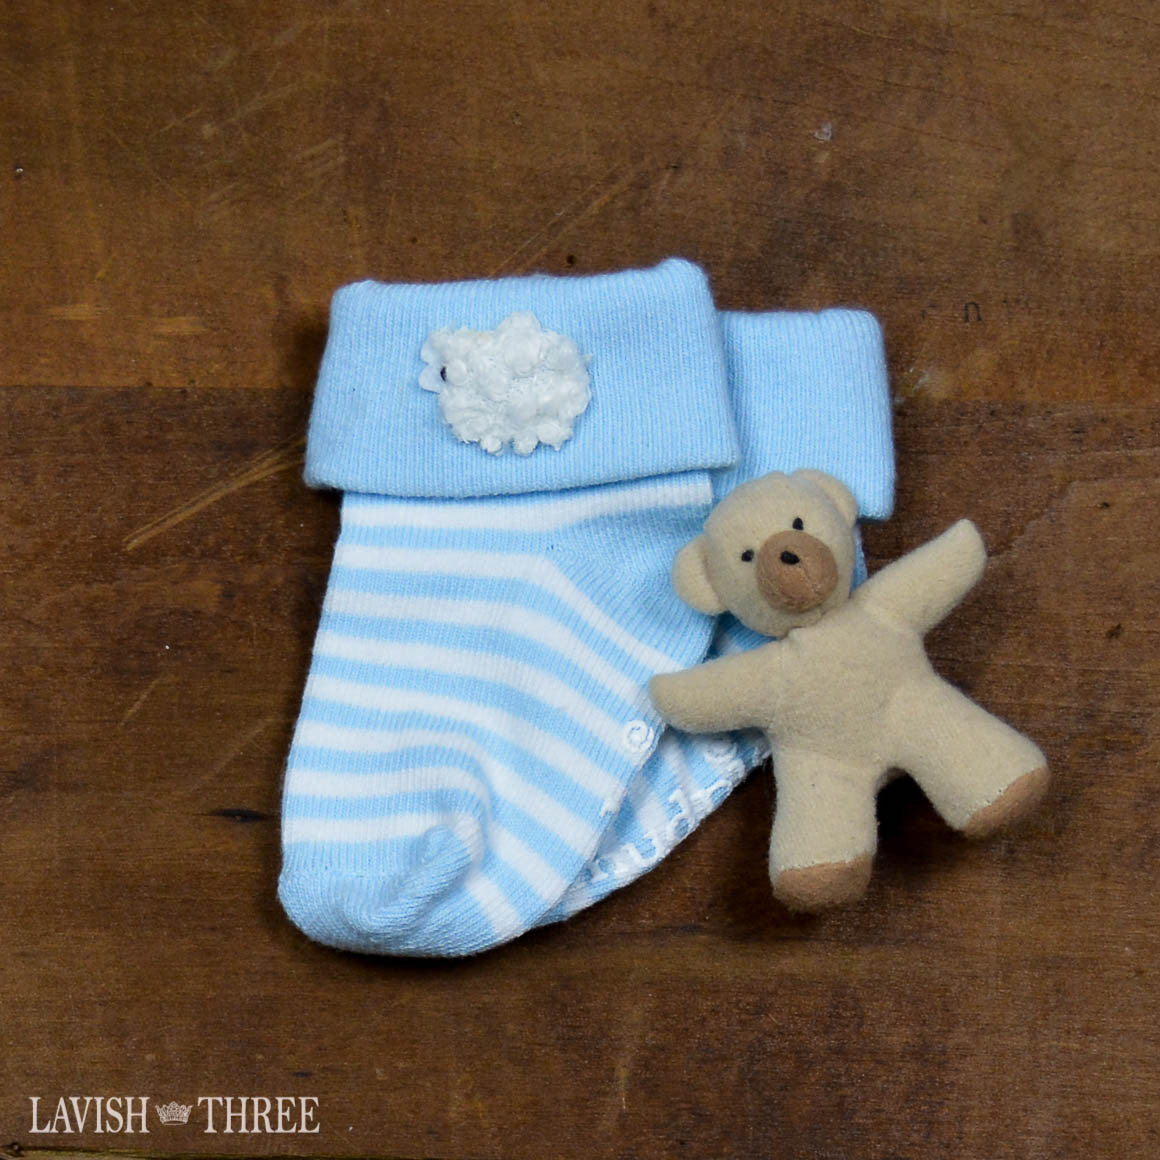 Blessed lamb baby boy pink stripe bib and socks gift set lavish three 3